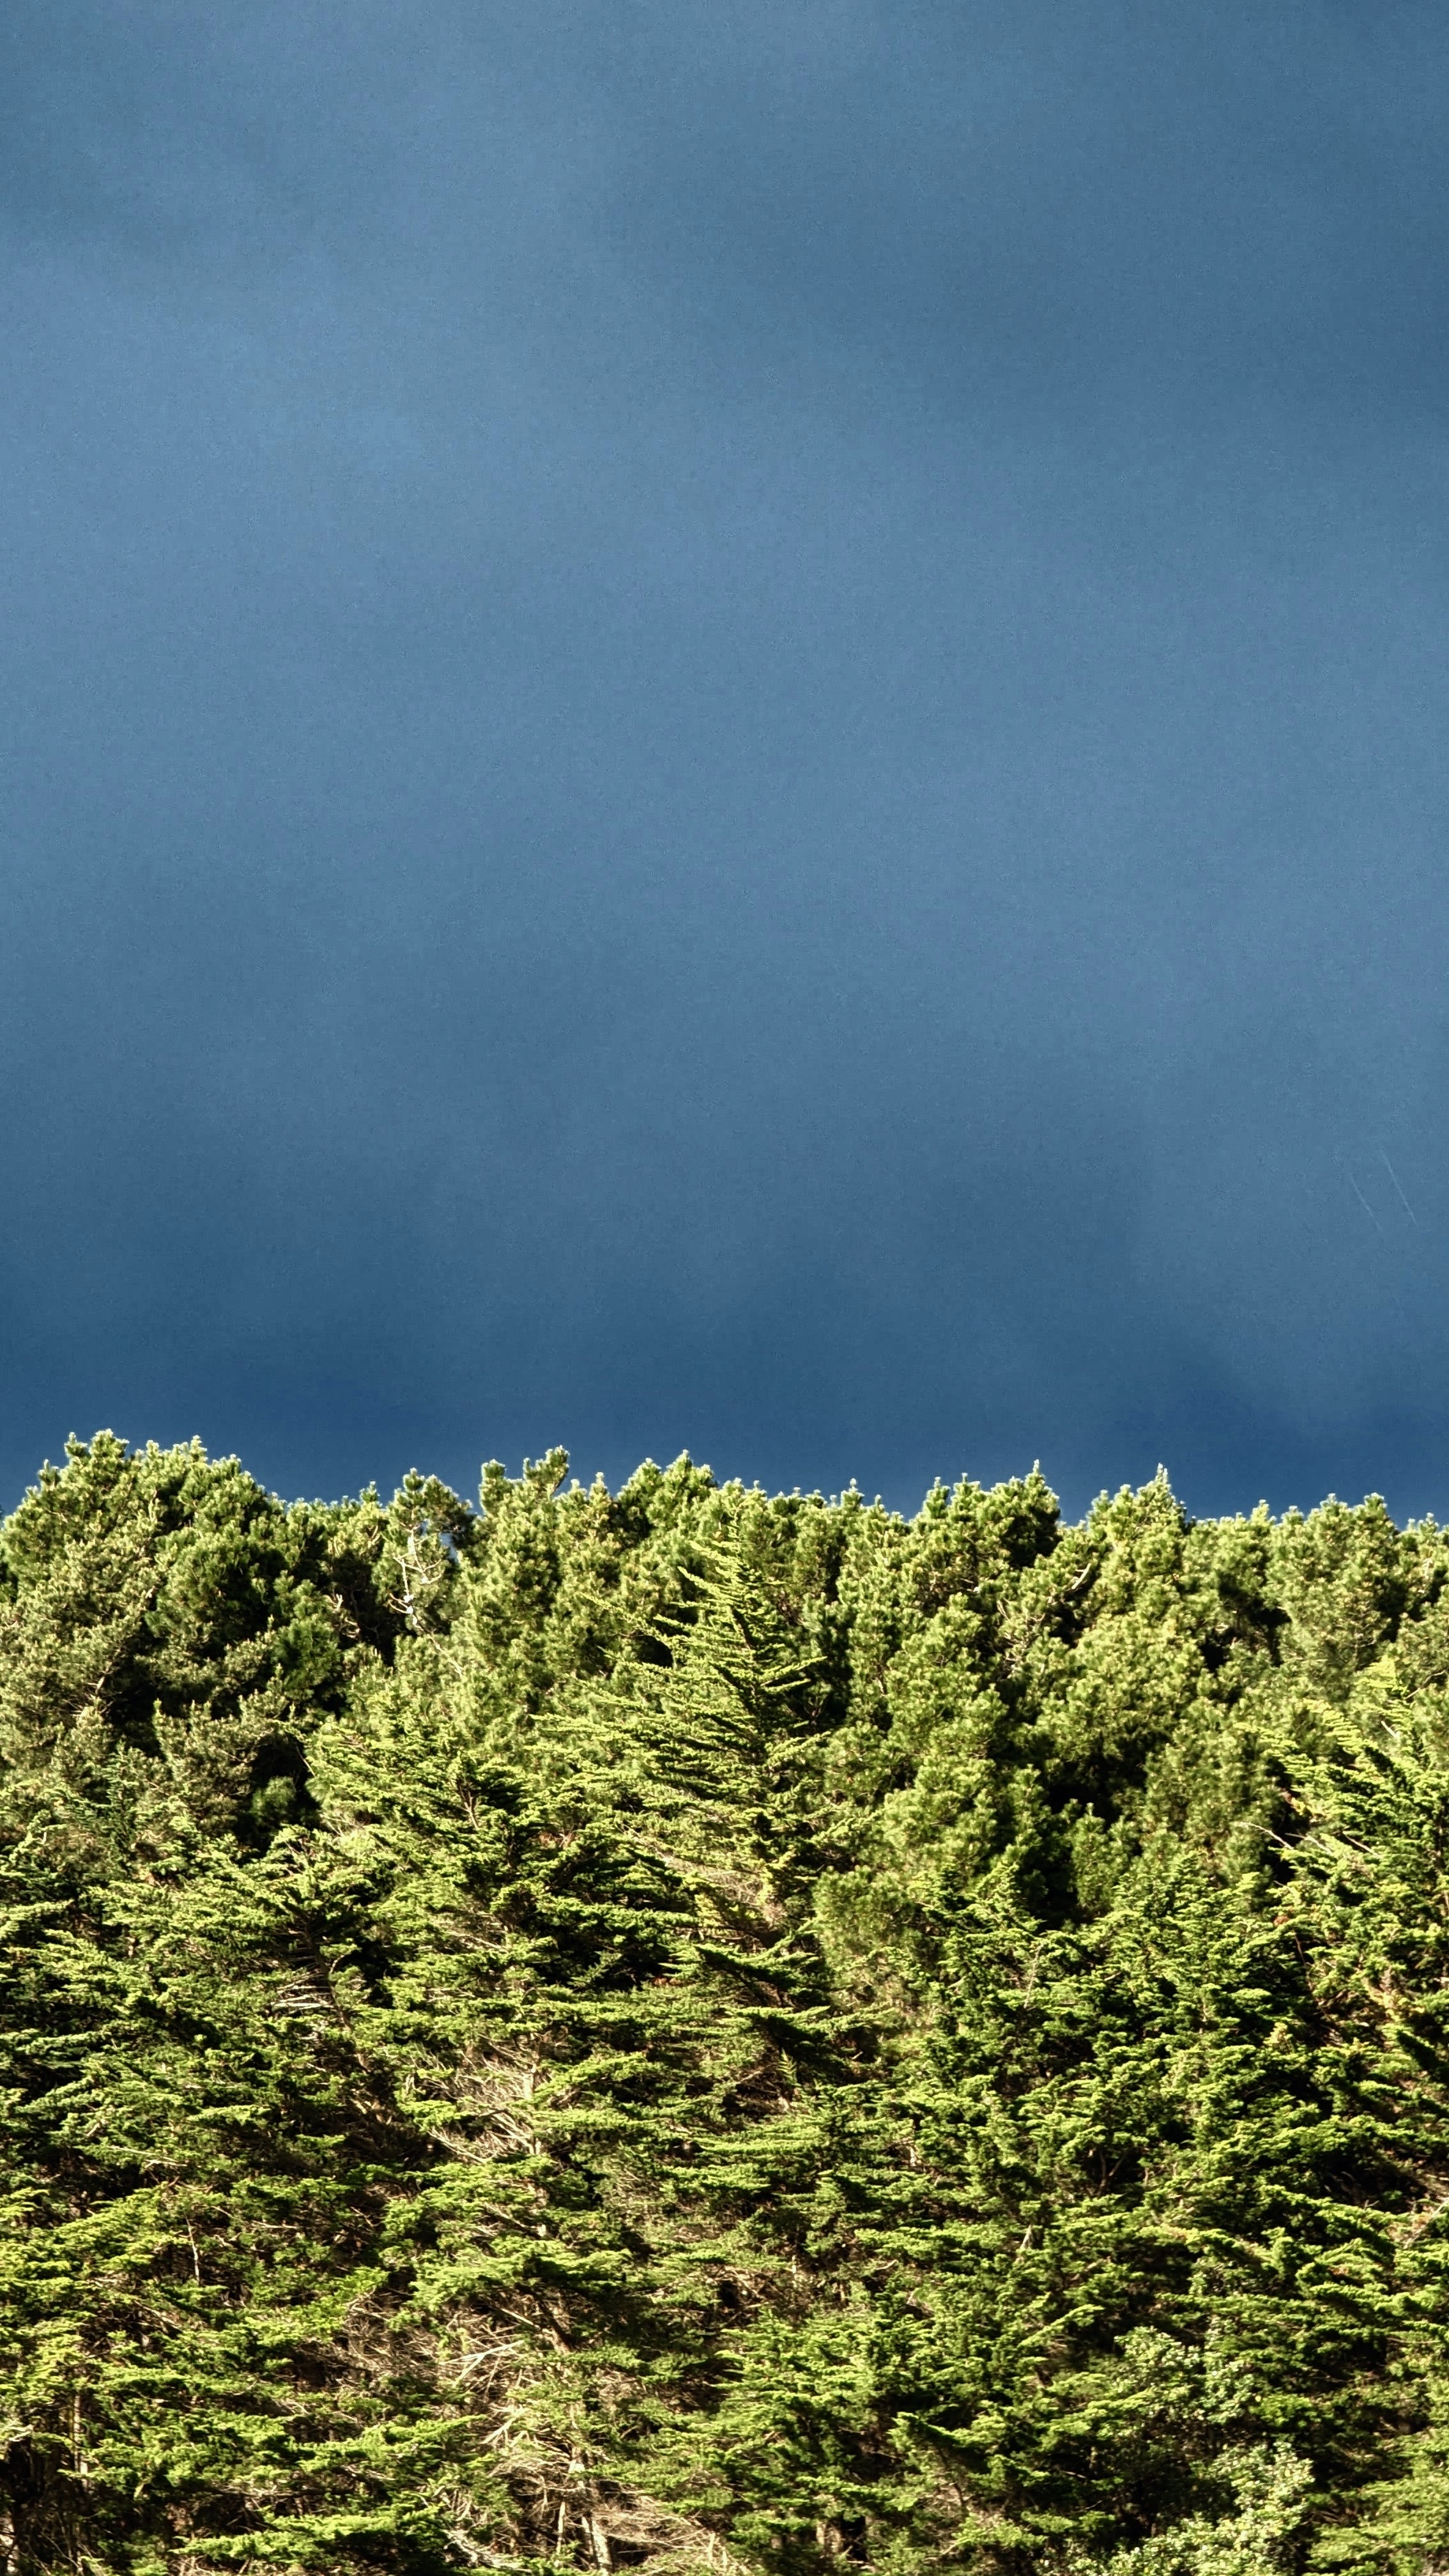 Dark gun blue cloud filled sky contrasting against sunlit green forest tree line